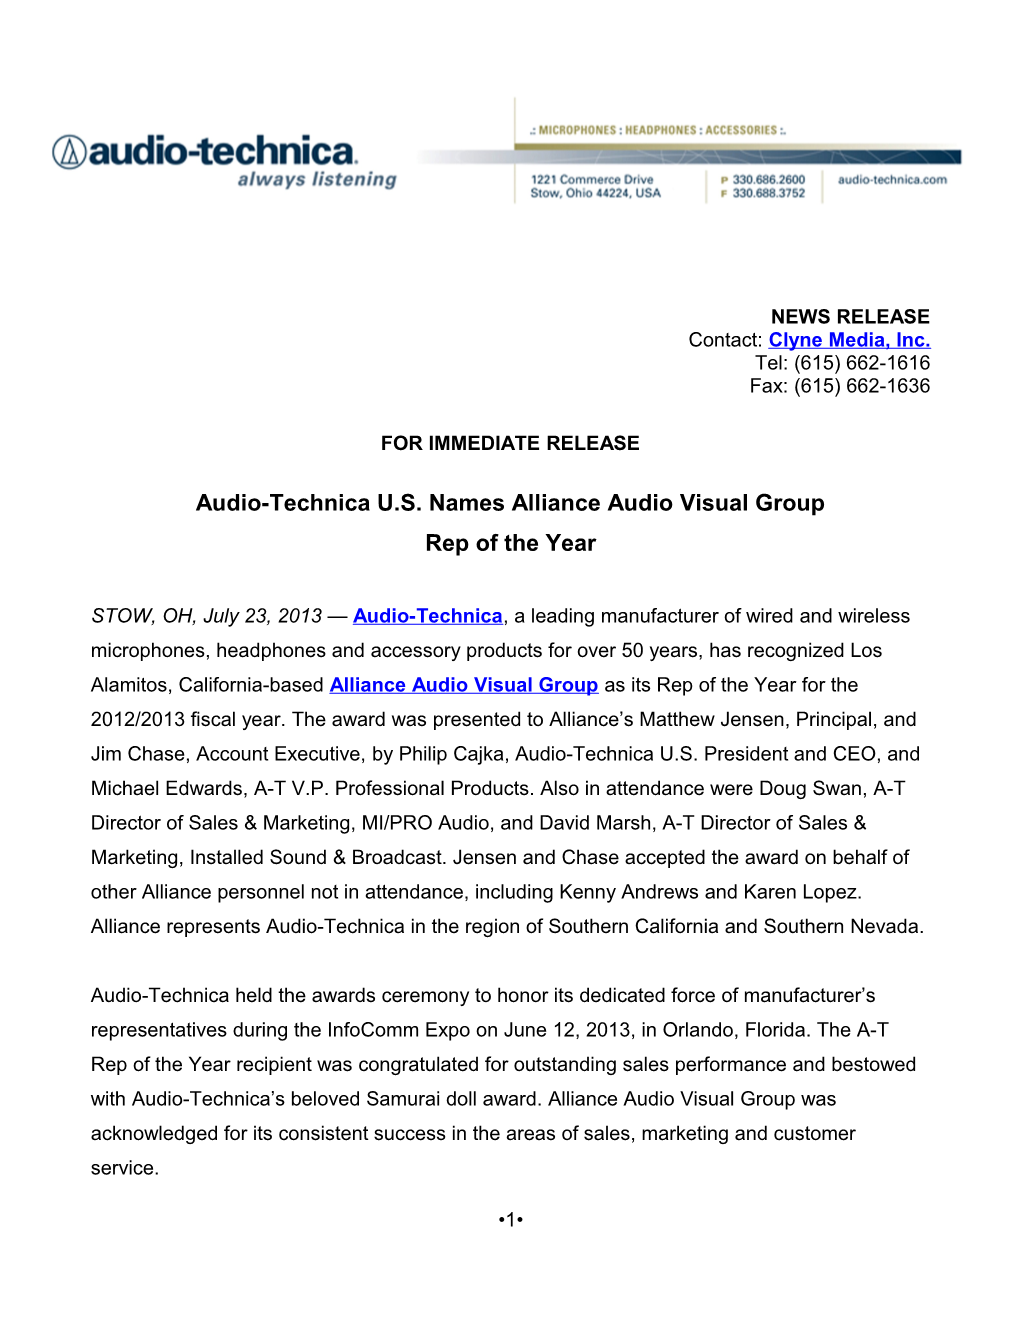 Audio-Technica U.S. Names Alliance Audio Visual Group